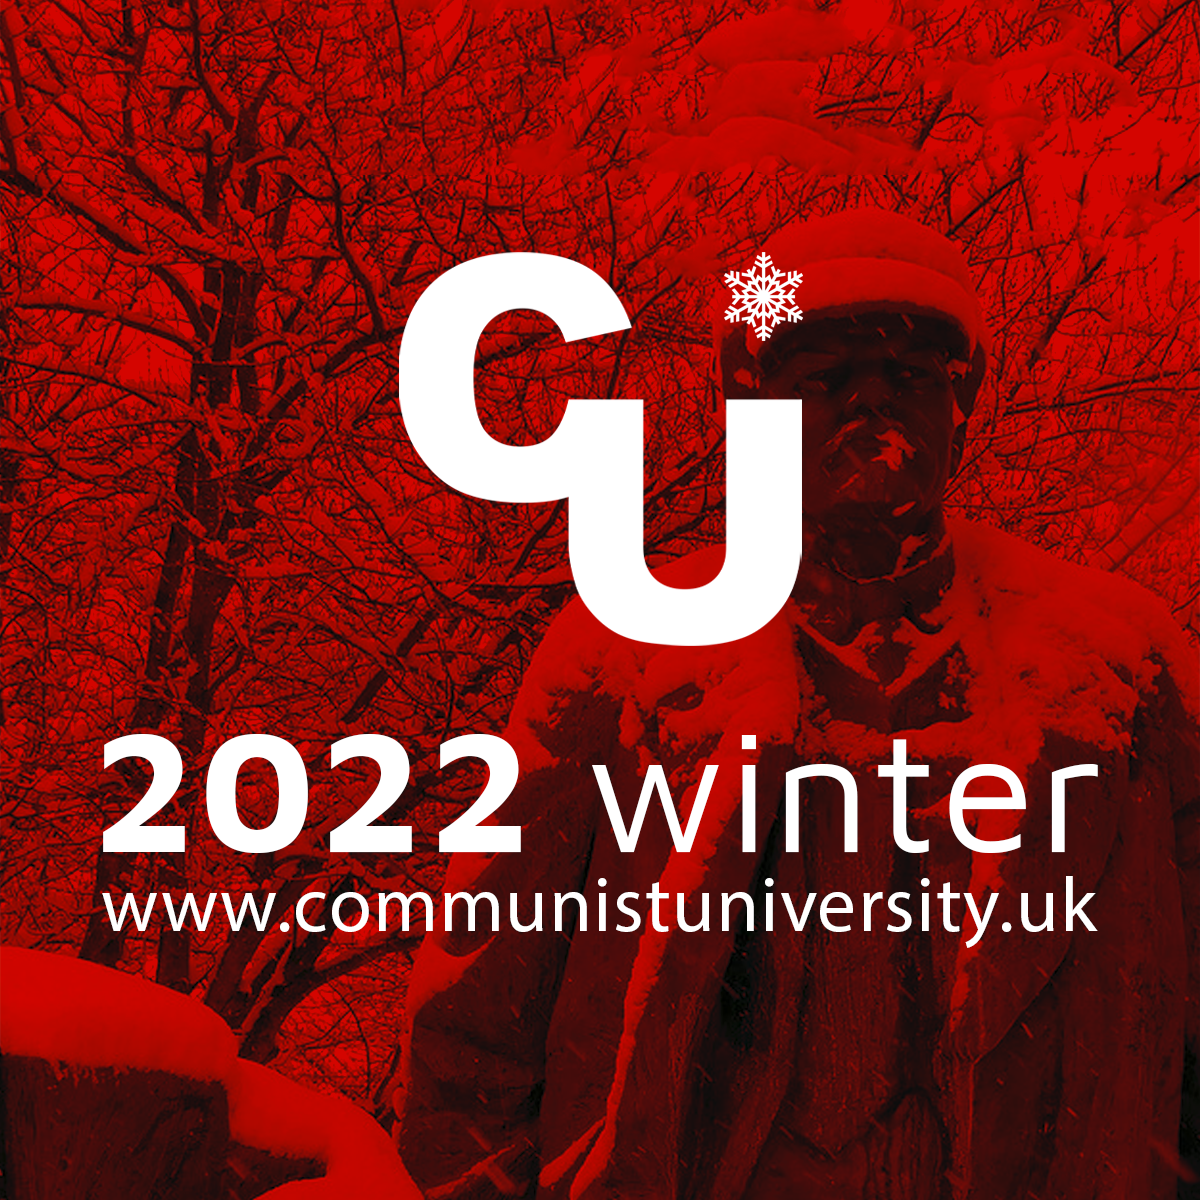 Communist University 2022 Winter